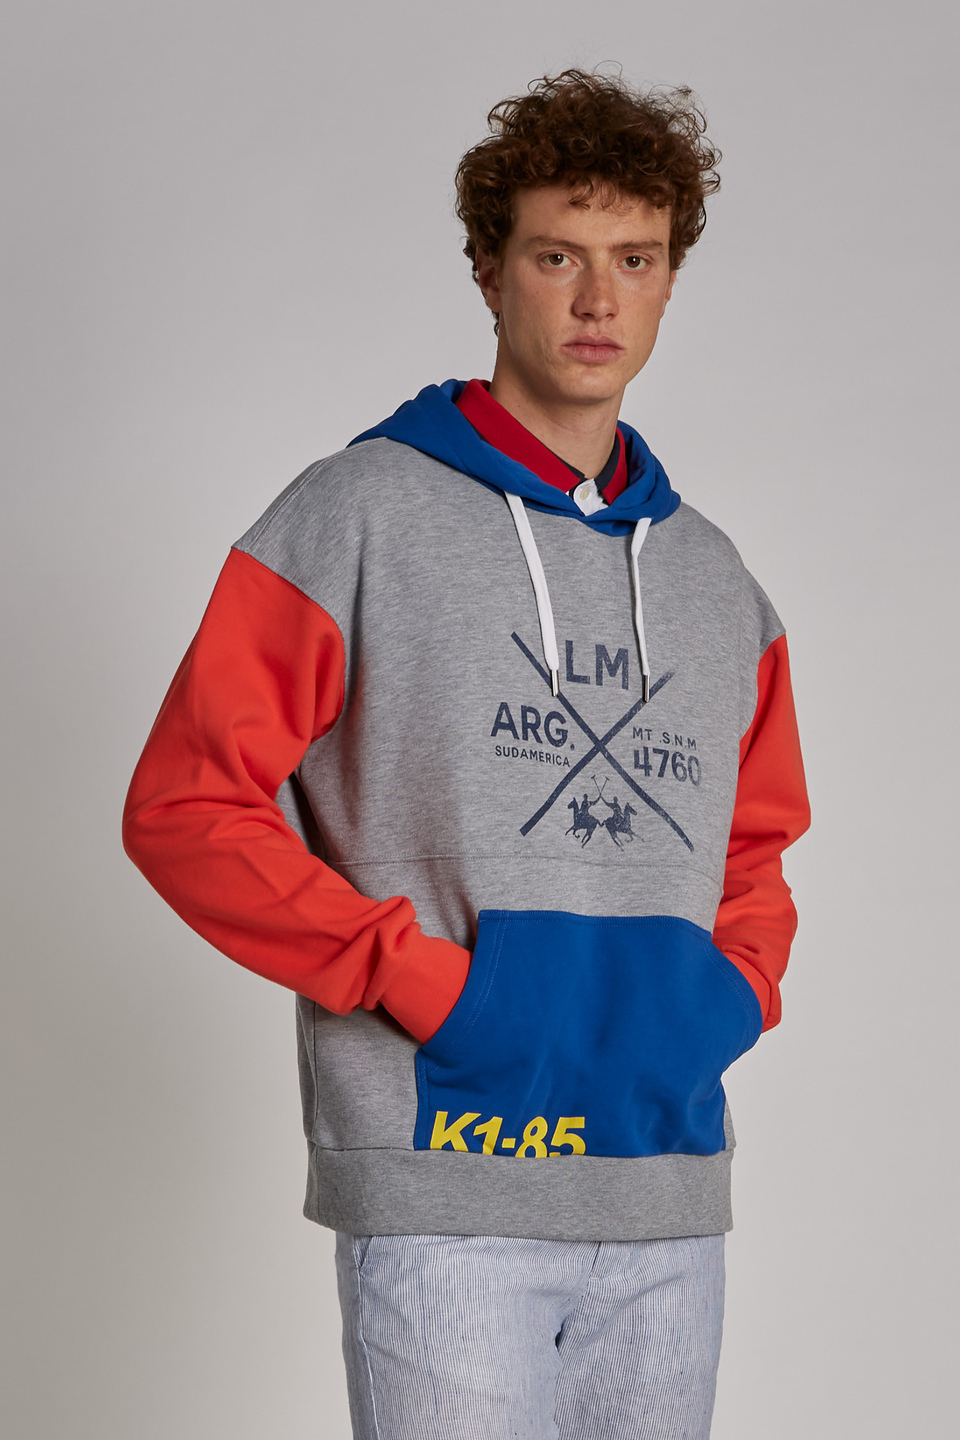 Herren-Sweatshirt aus Baumwollmix mit Reißverschluss, oversized Modell | La Martina - Official Online Shop